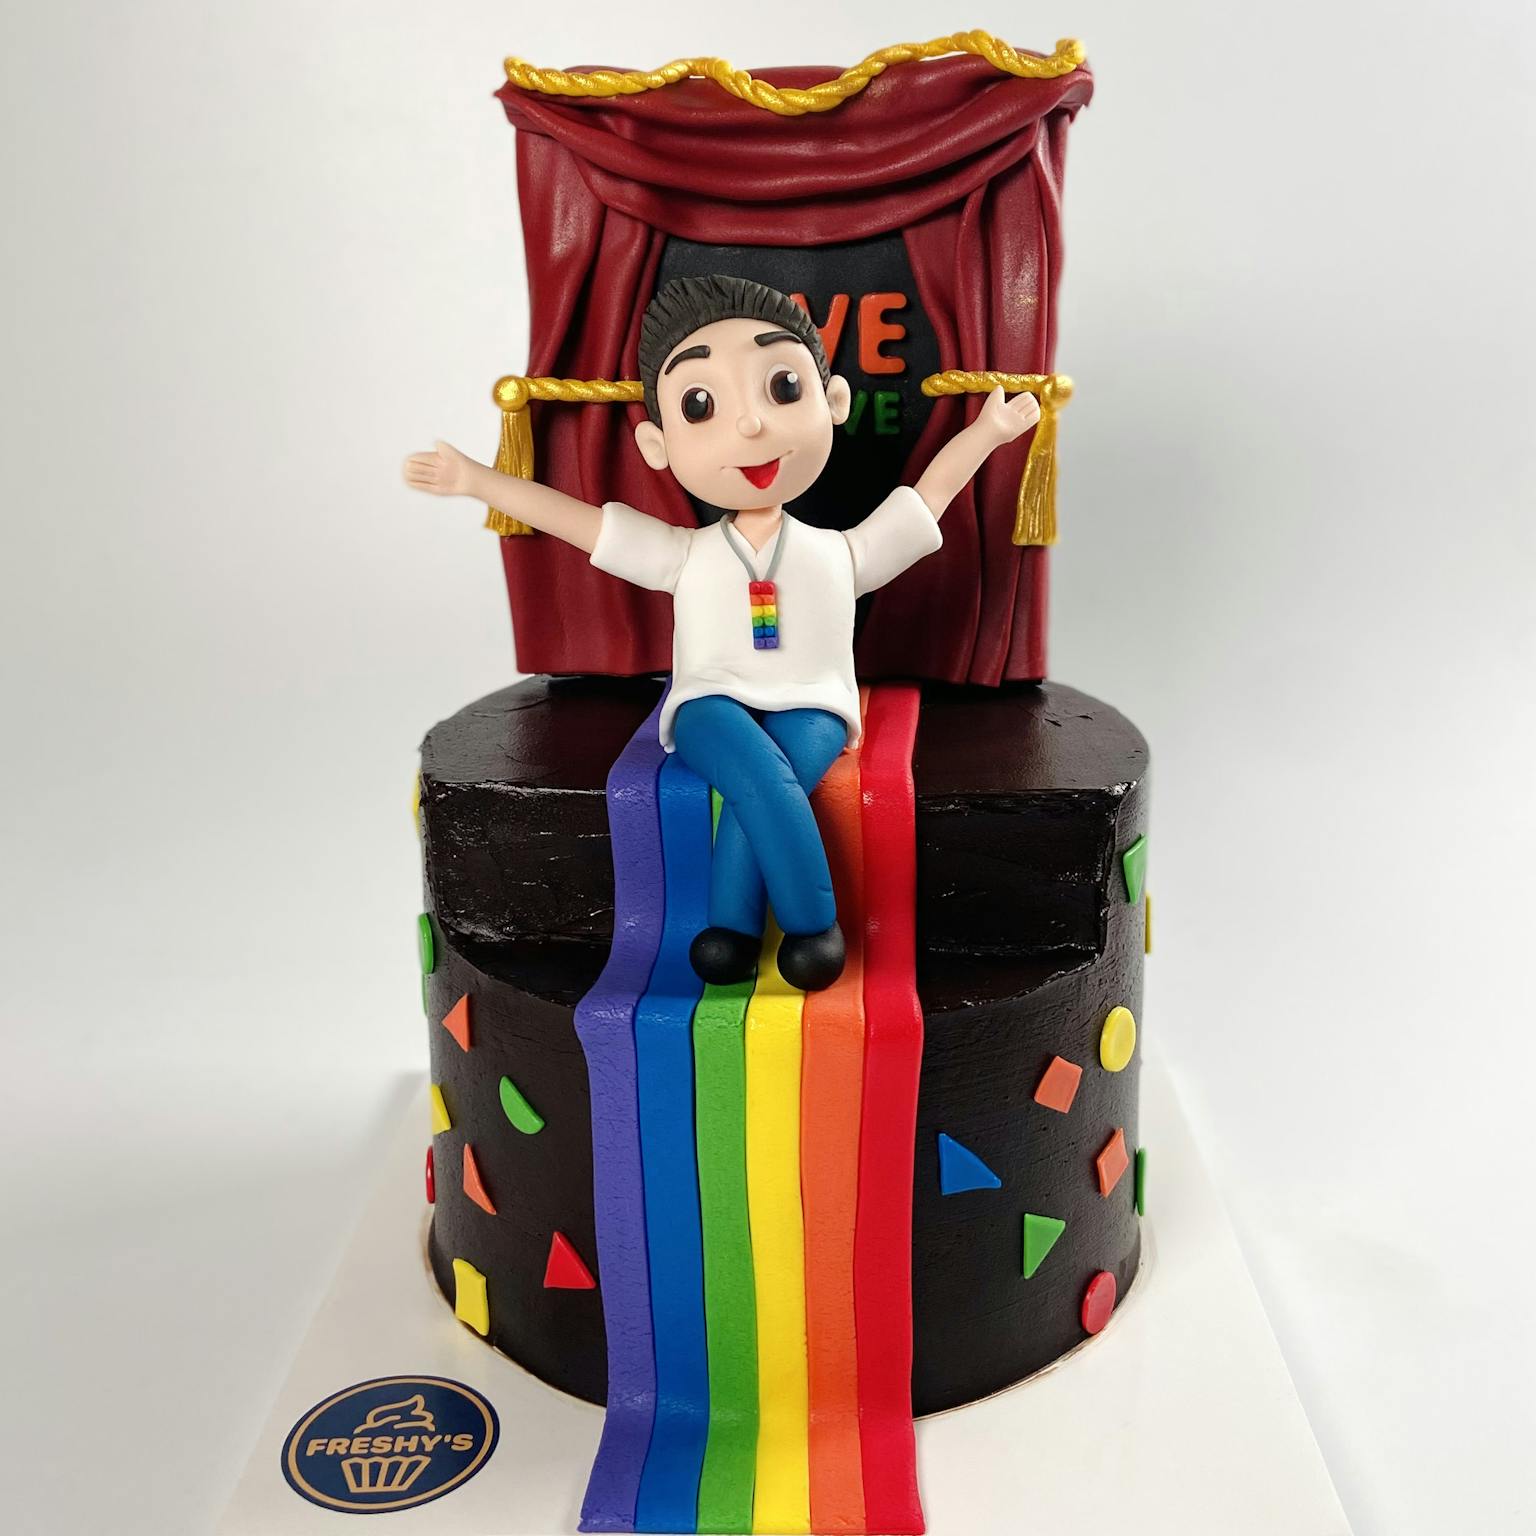 100% edible fondant sculpted pride themed birthday cake